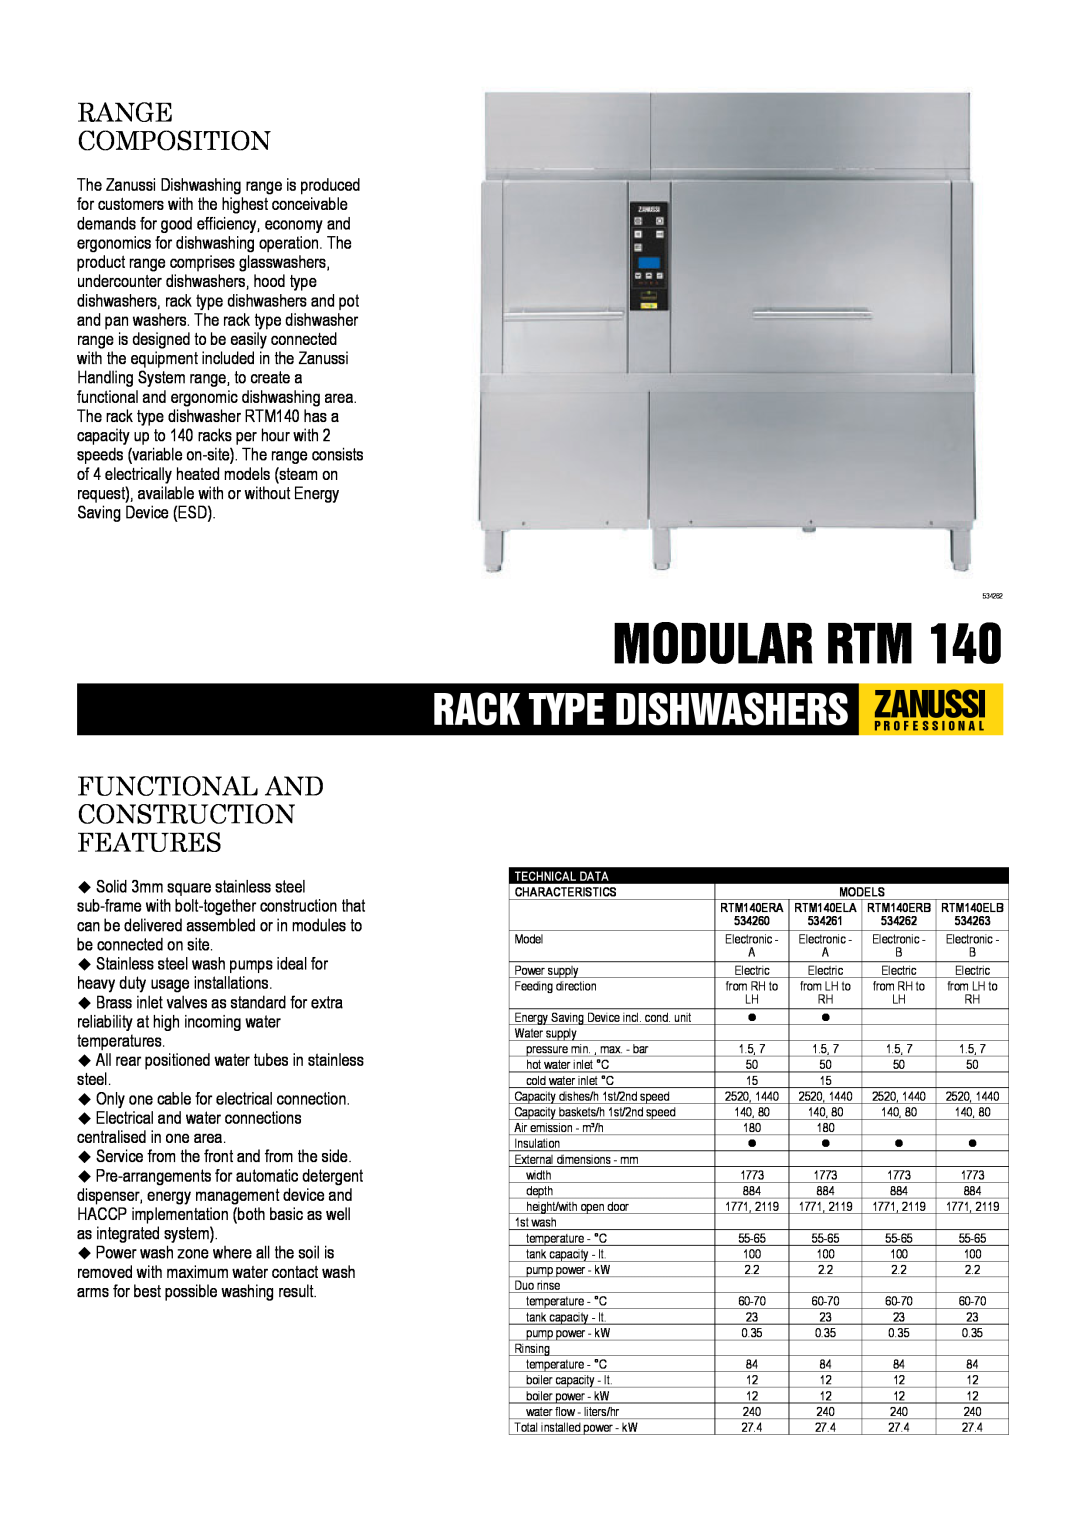 Zanussi RTM140ELA, RTM140ERB, RTM140ERA dimensions Modular Rtm, Range Composition, Functional And Construction Features 